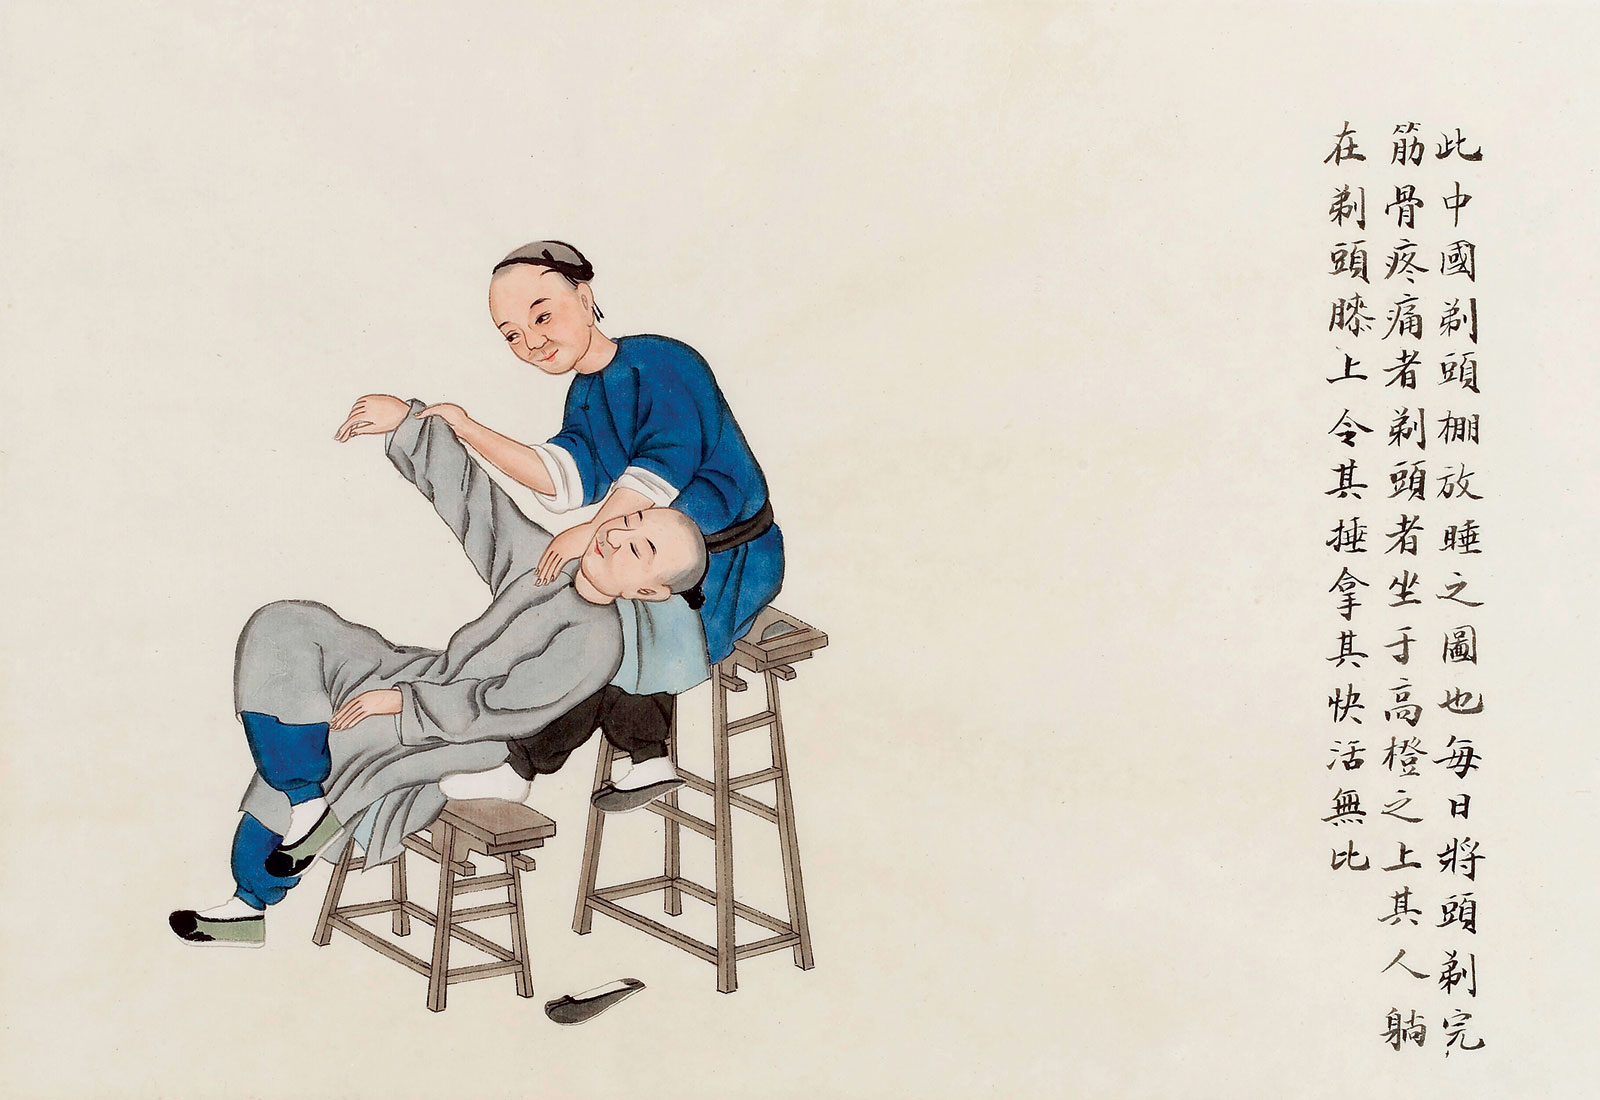 Zhou Pei Qun, *Masaje de hombro*, *ca*. 1890